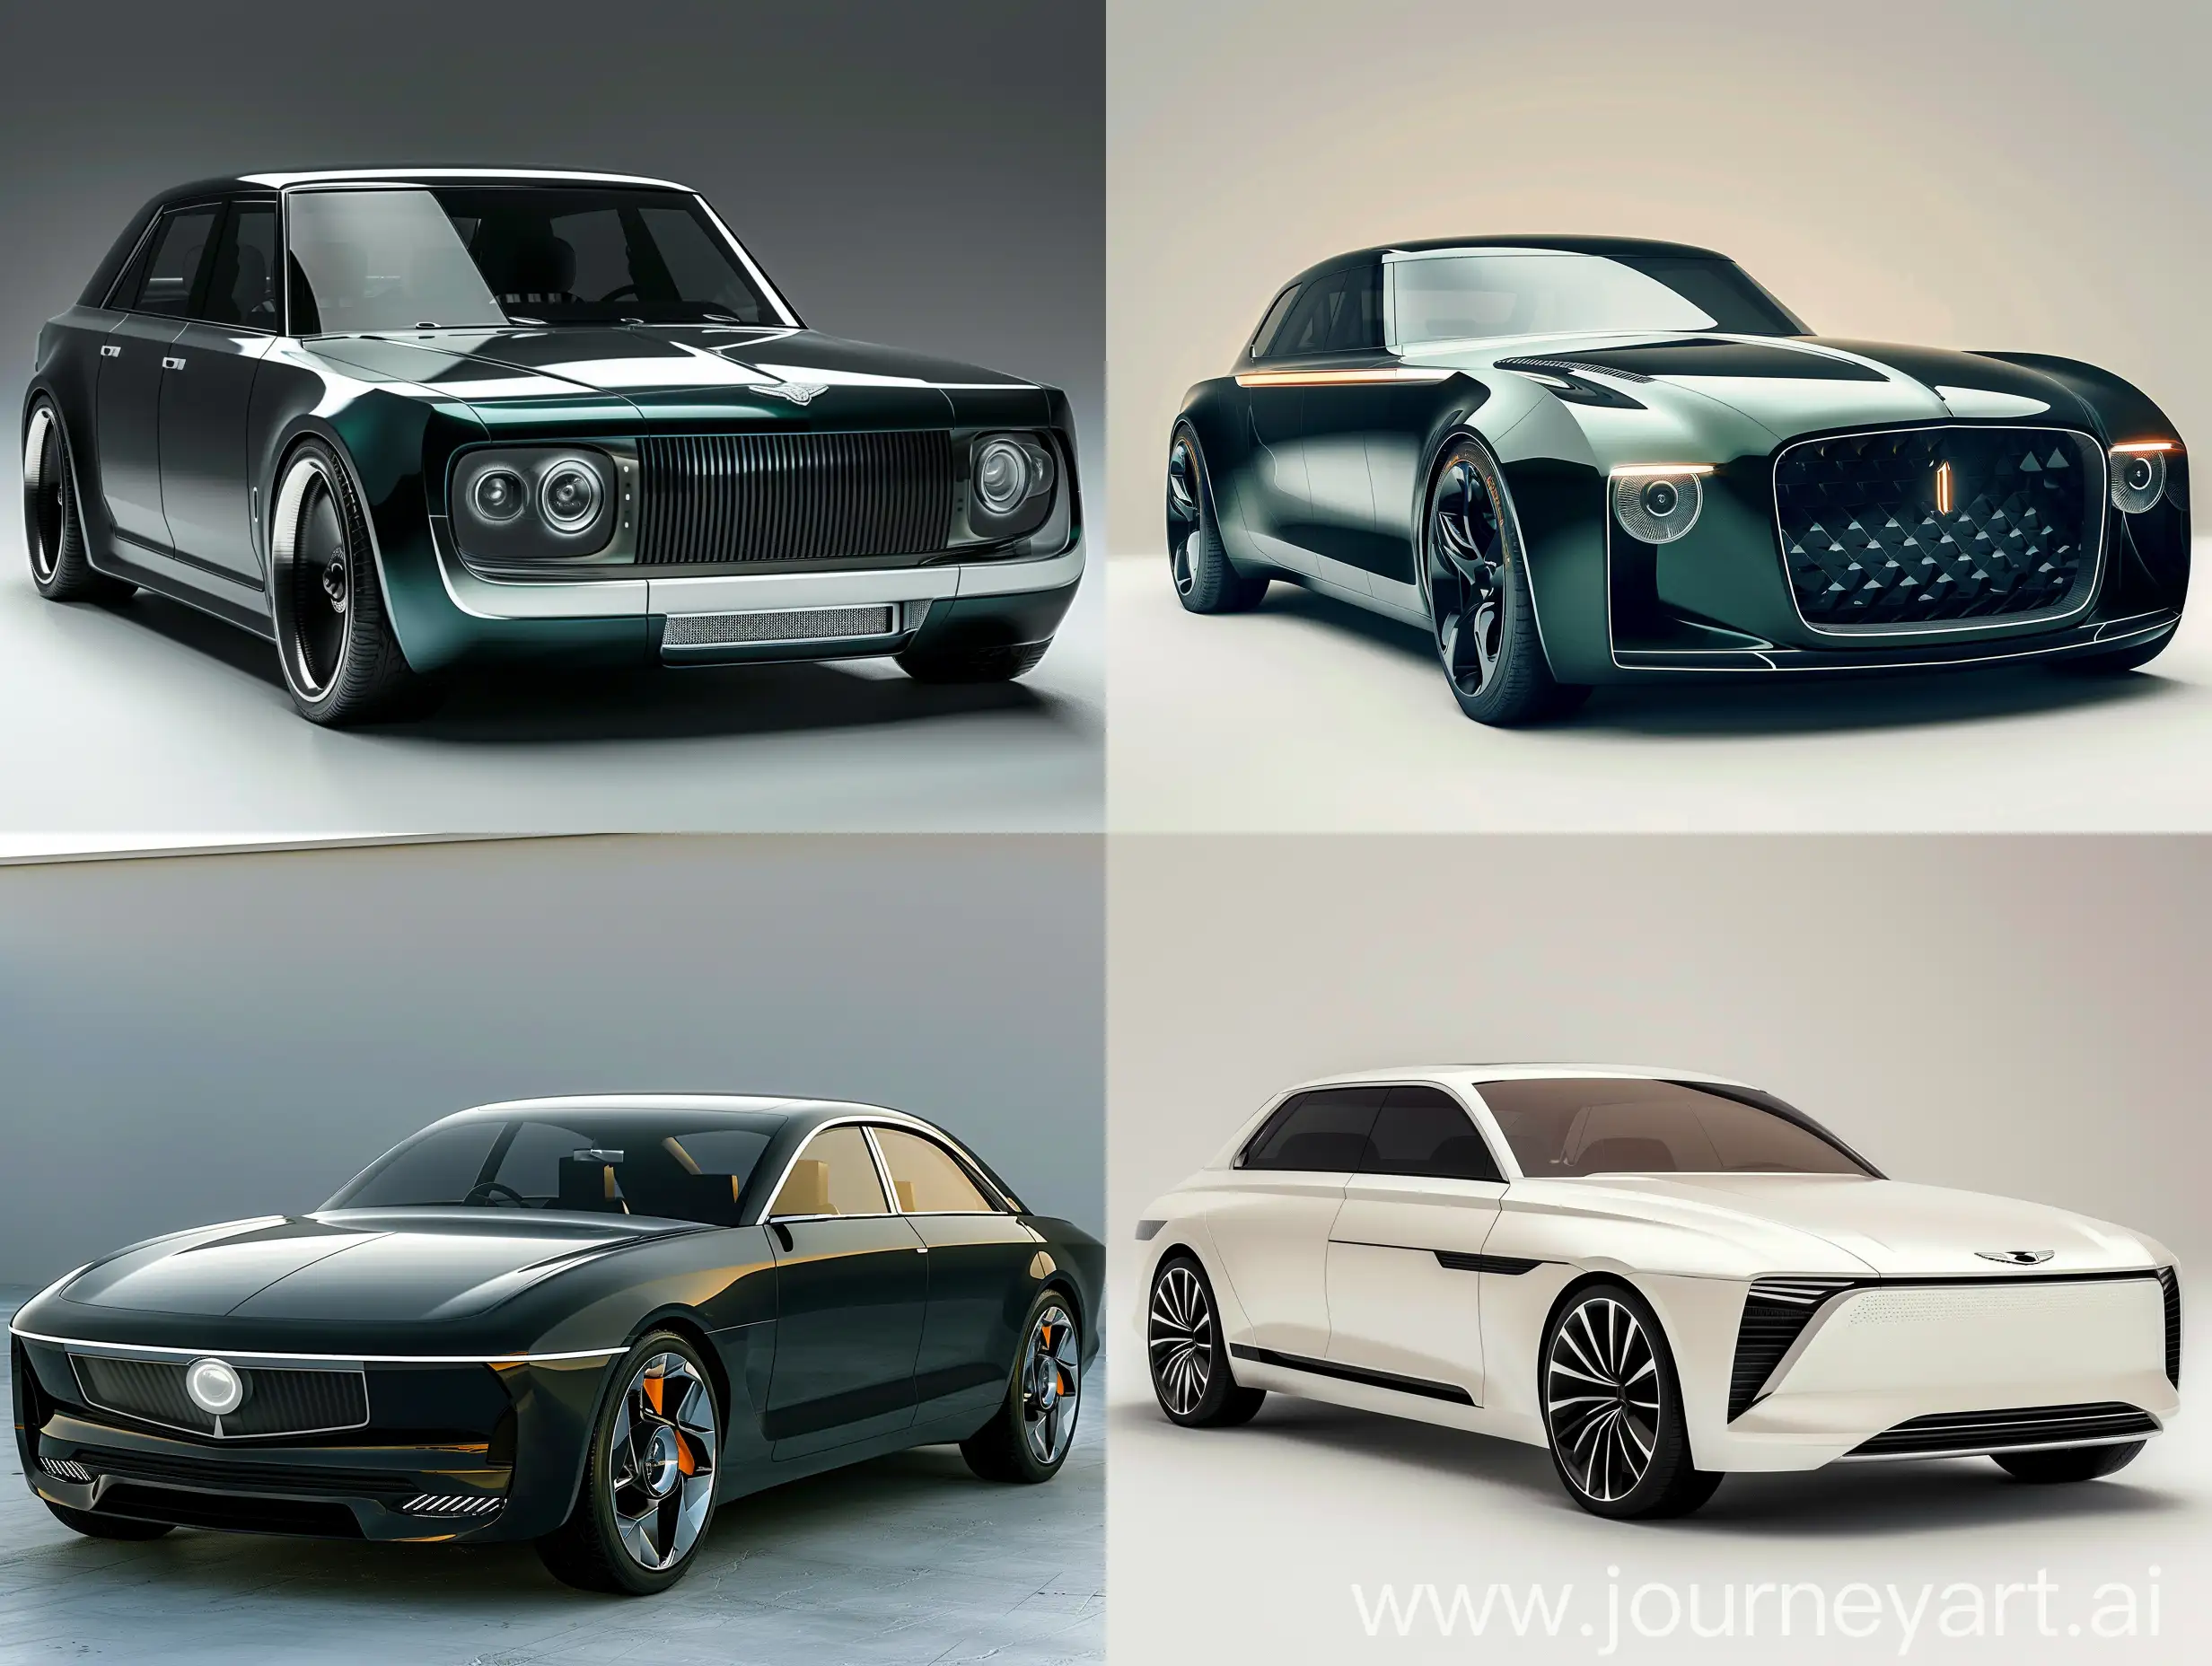 Futuristic-Reinterpretation-Reviving-the-Iconic-Hindustan-Motors-Ambassador-Sedan-with-Aristocratic-Elegance-Front-View